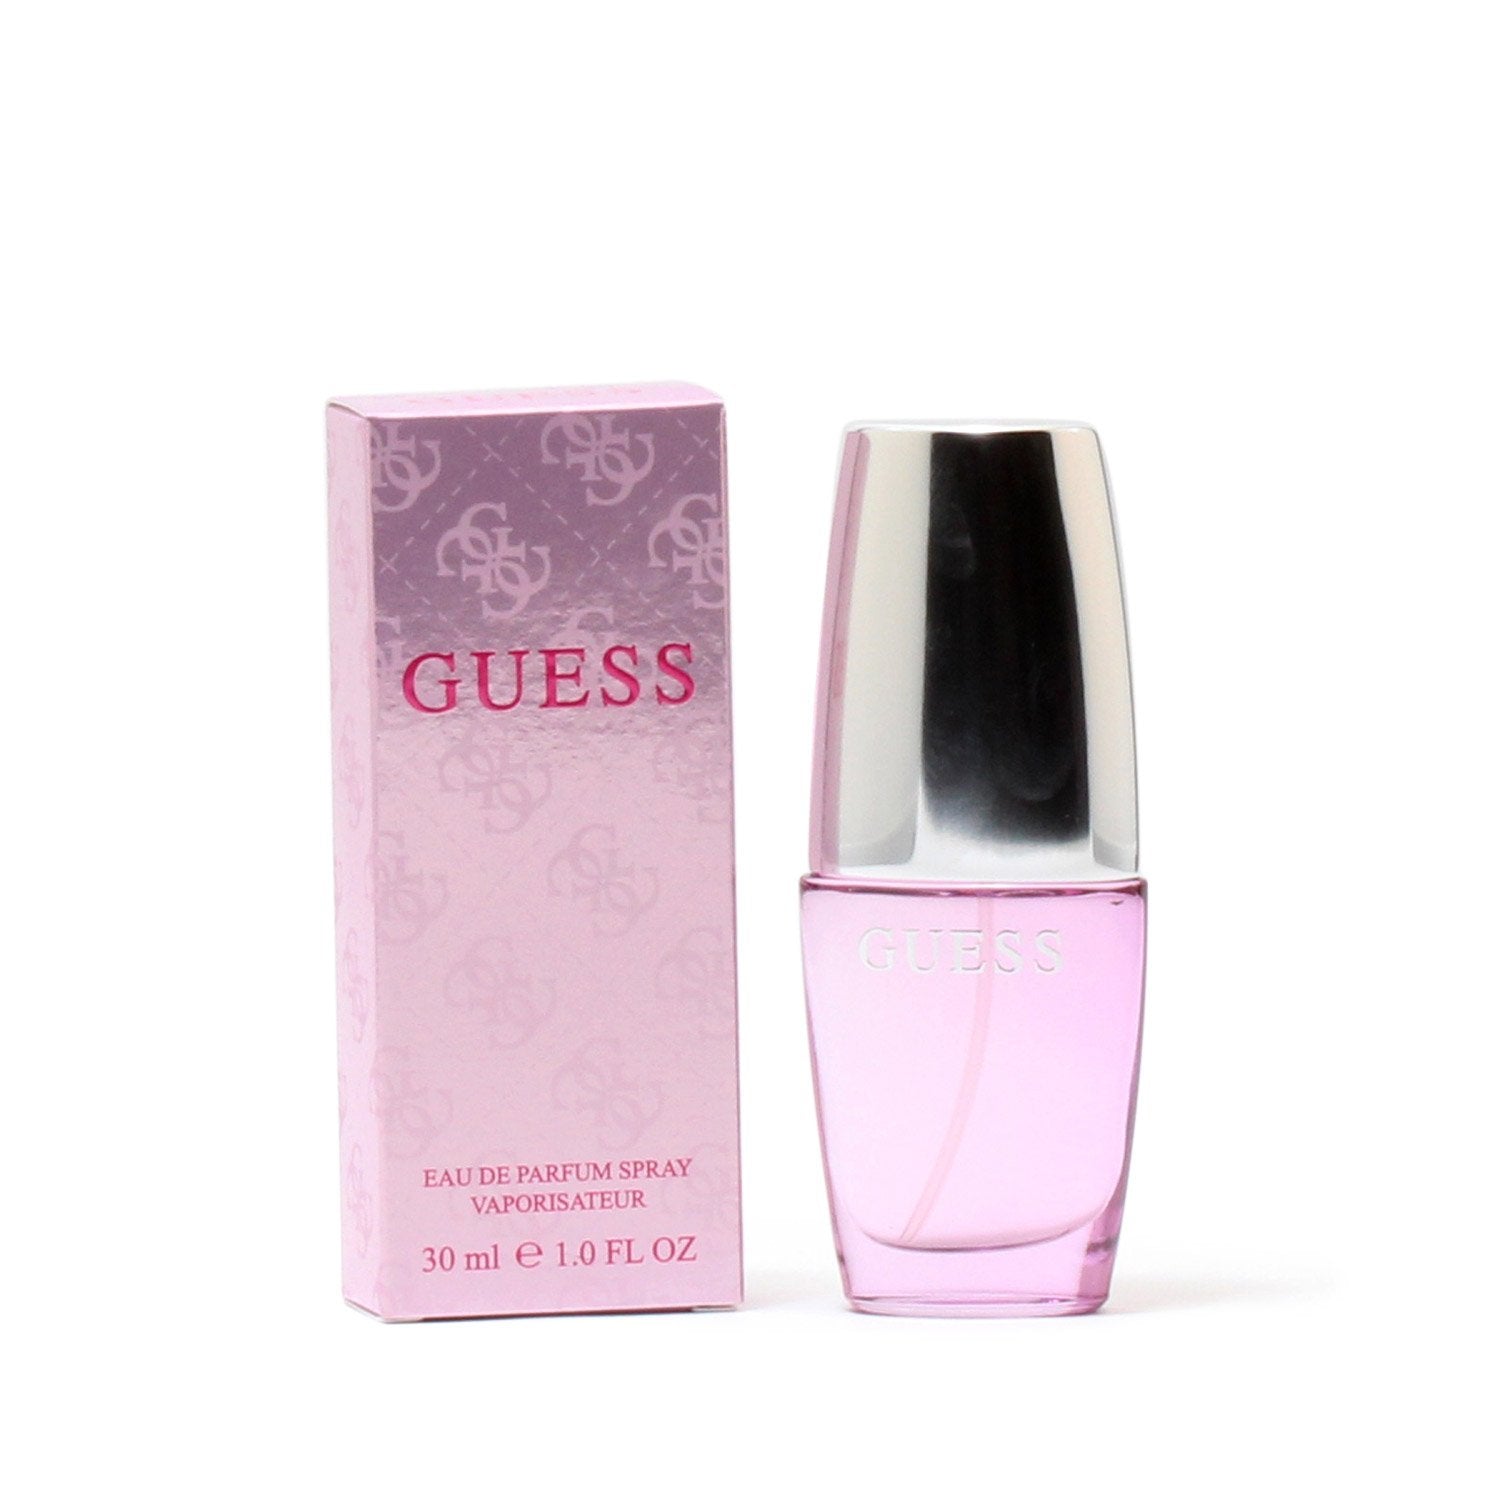 Perfume - GUESS FOR WOMEN - EAU DE PARFUM SPRAY